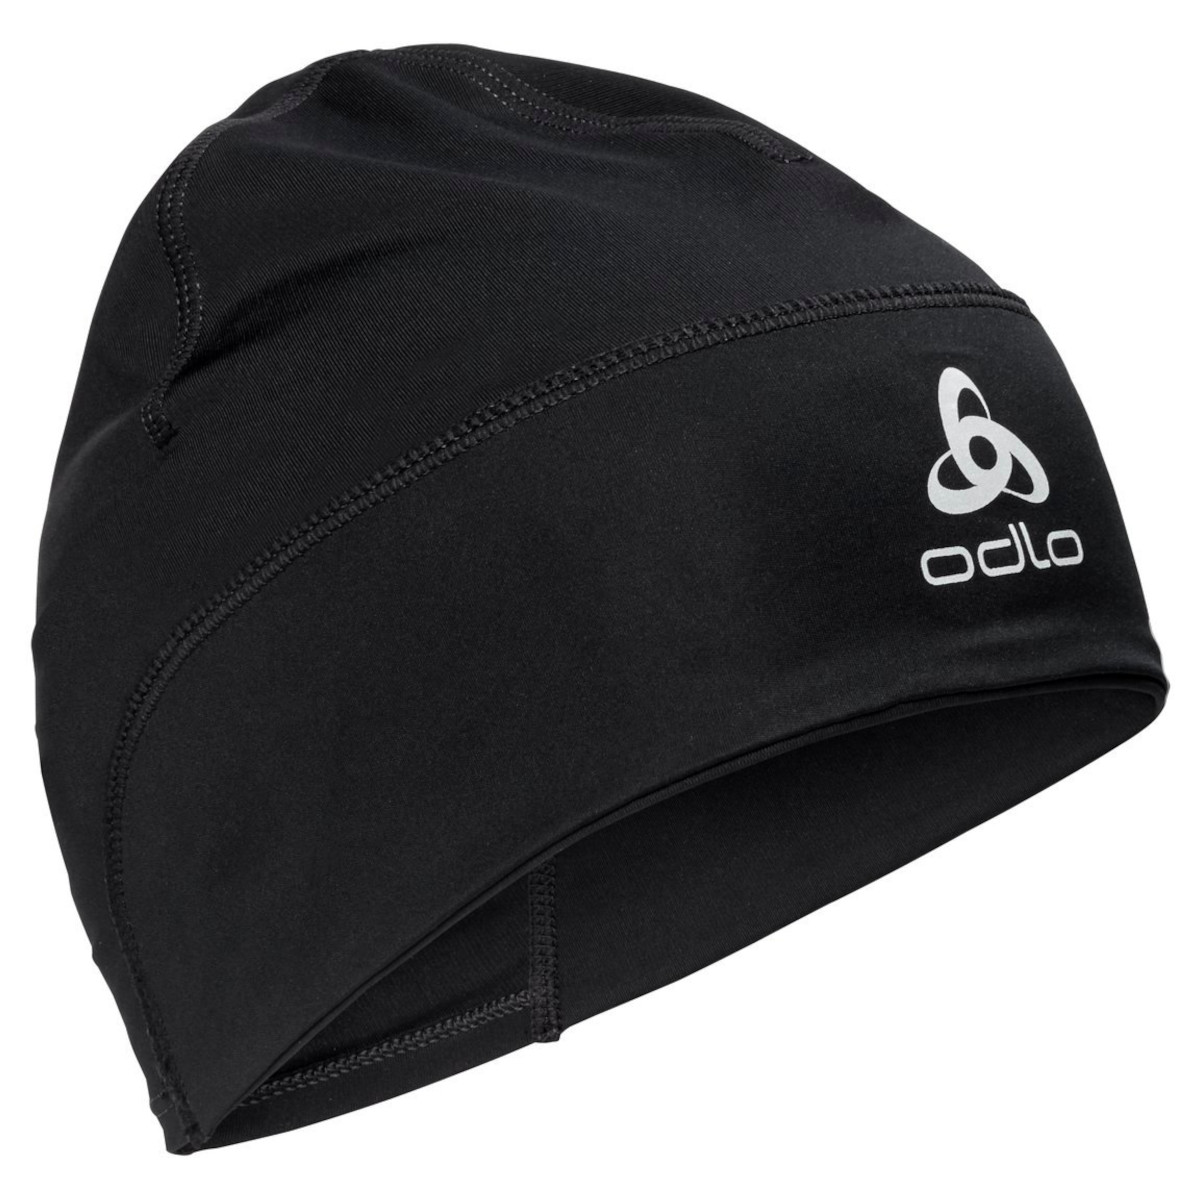 Produktbild von Odlo Ceramiwarm Mütze - schwarz